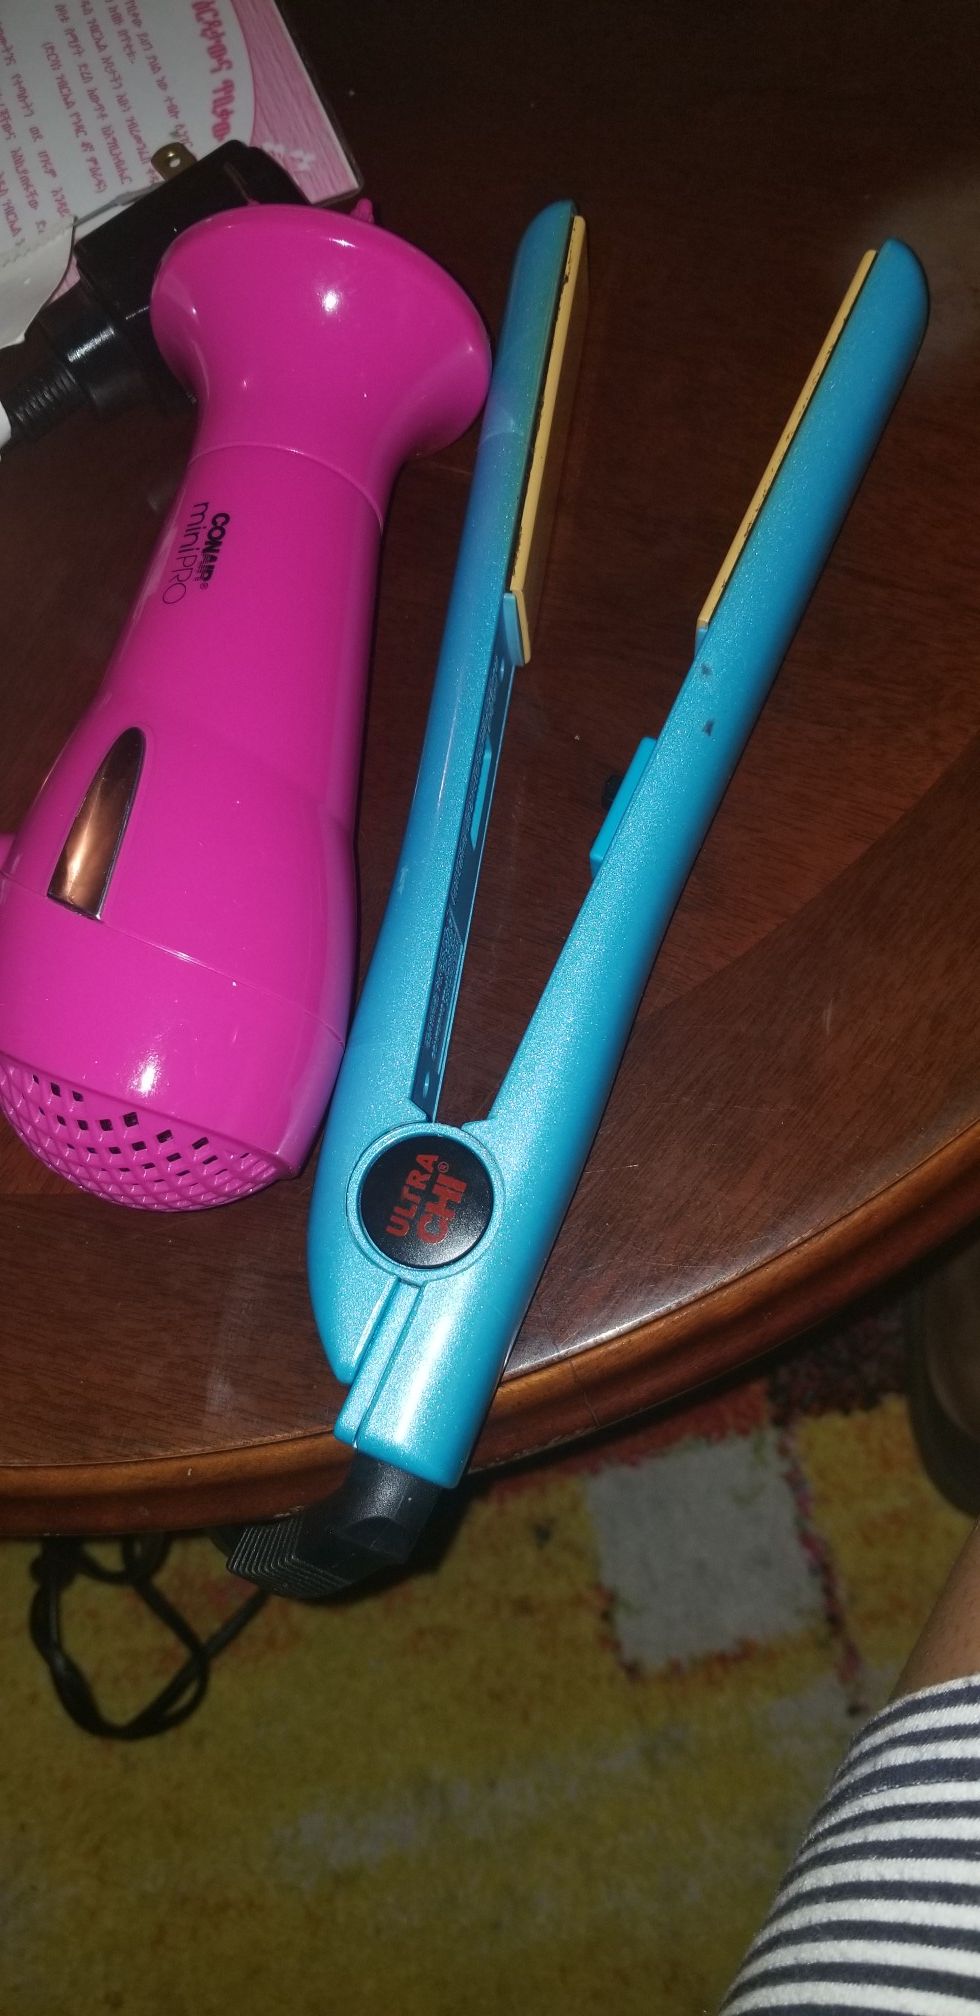 CHl hair straightener and hair dryer .